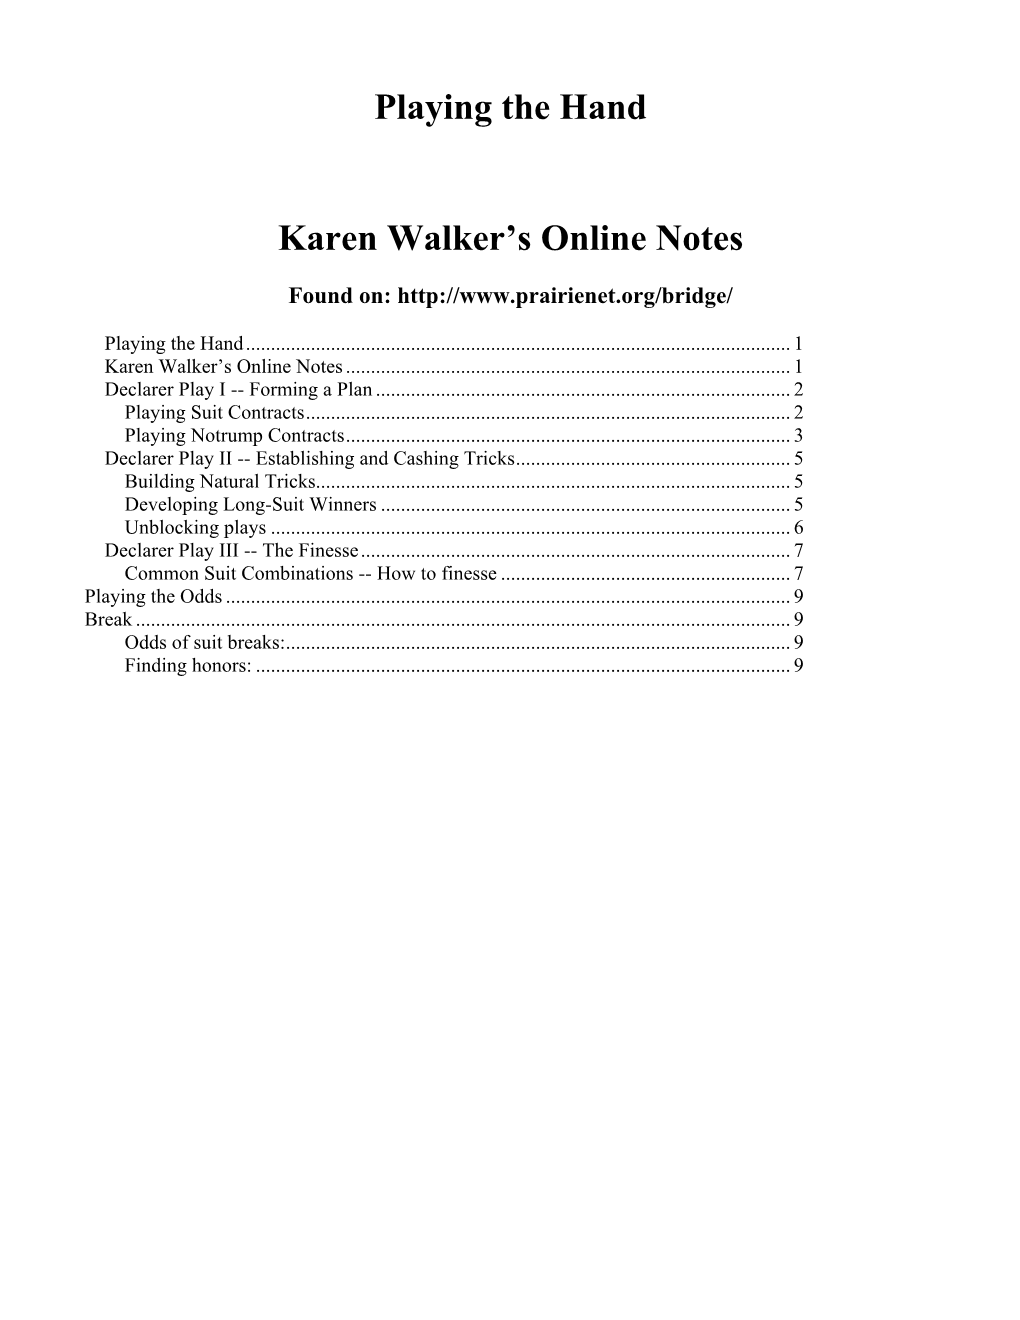 Playing the Hand Karen Walker's Online Notes